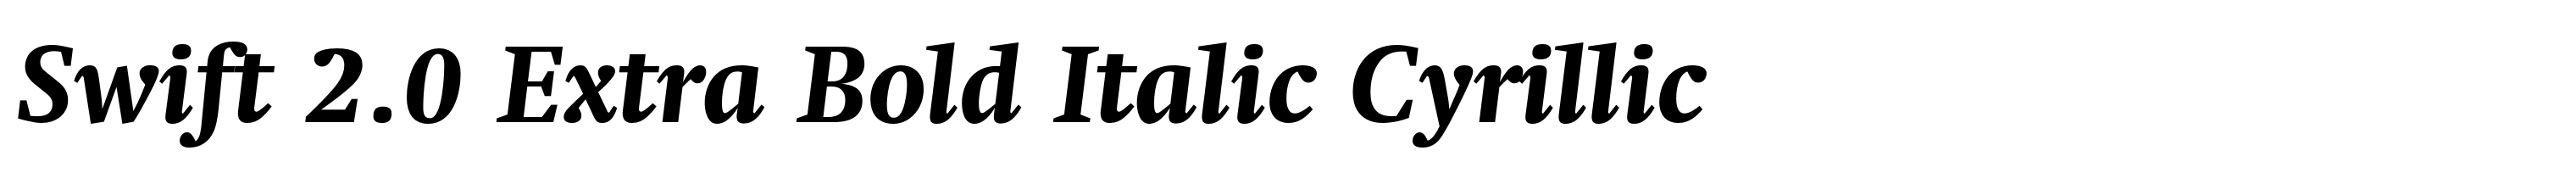 Swift 2.0 Extra Bold Italic Cyrillic